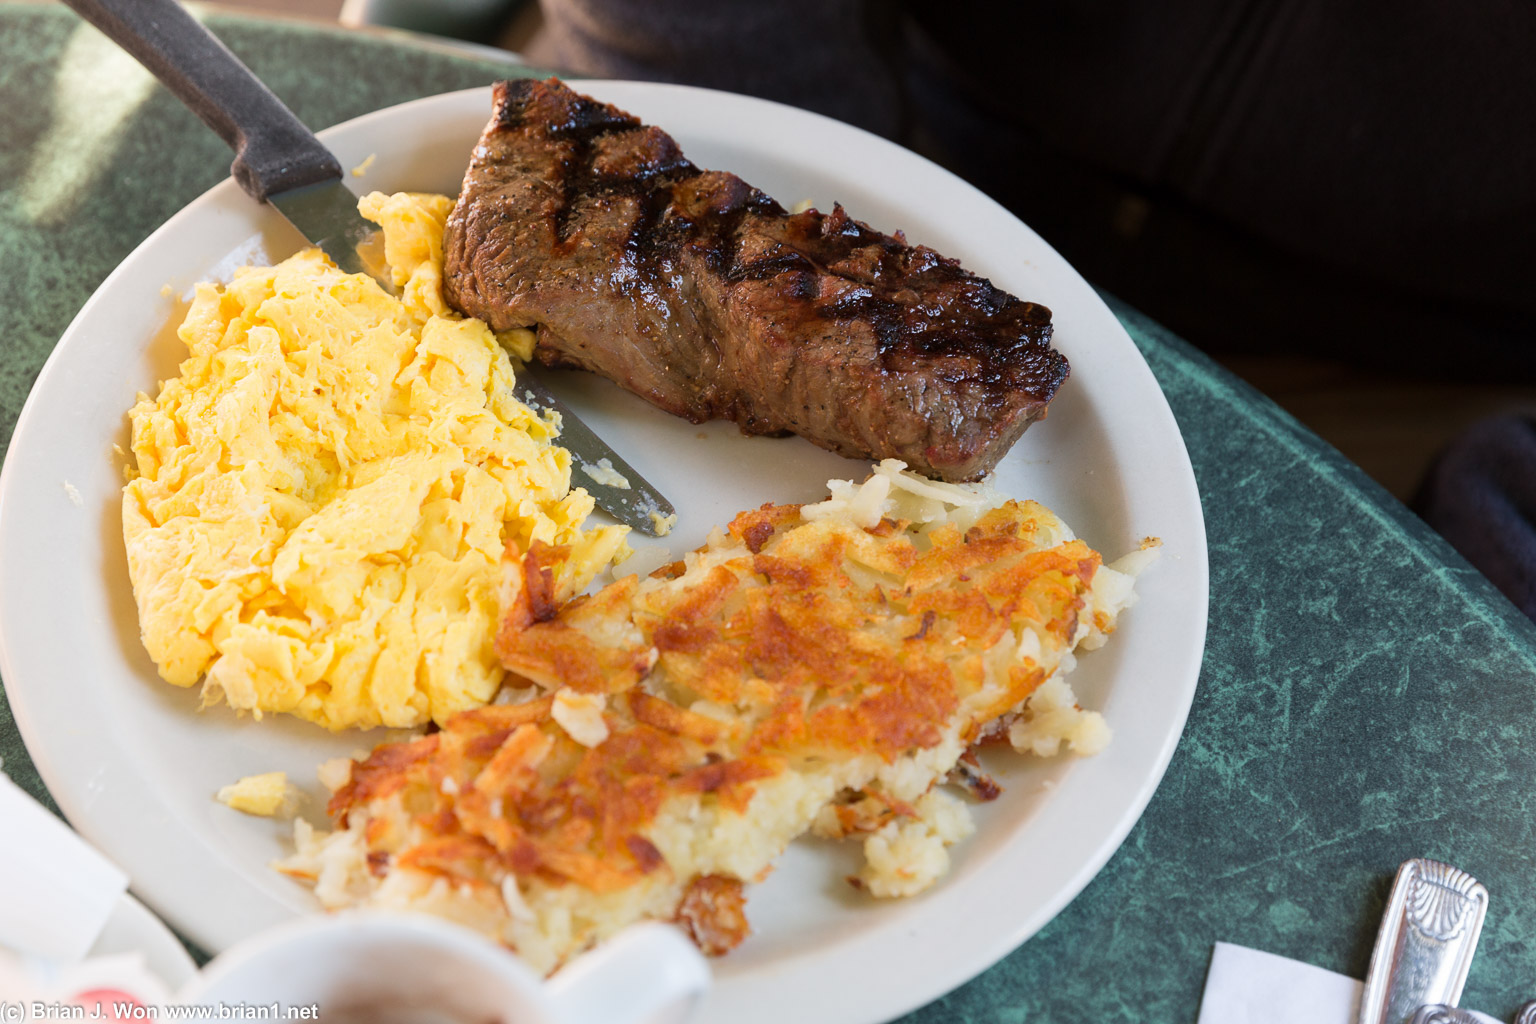 That is a legit steak for steak and eggs. Mmmm, those hashbrowns too!